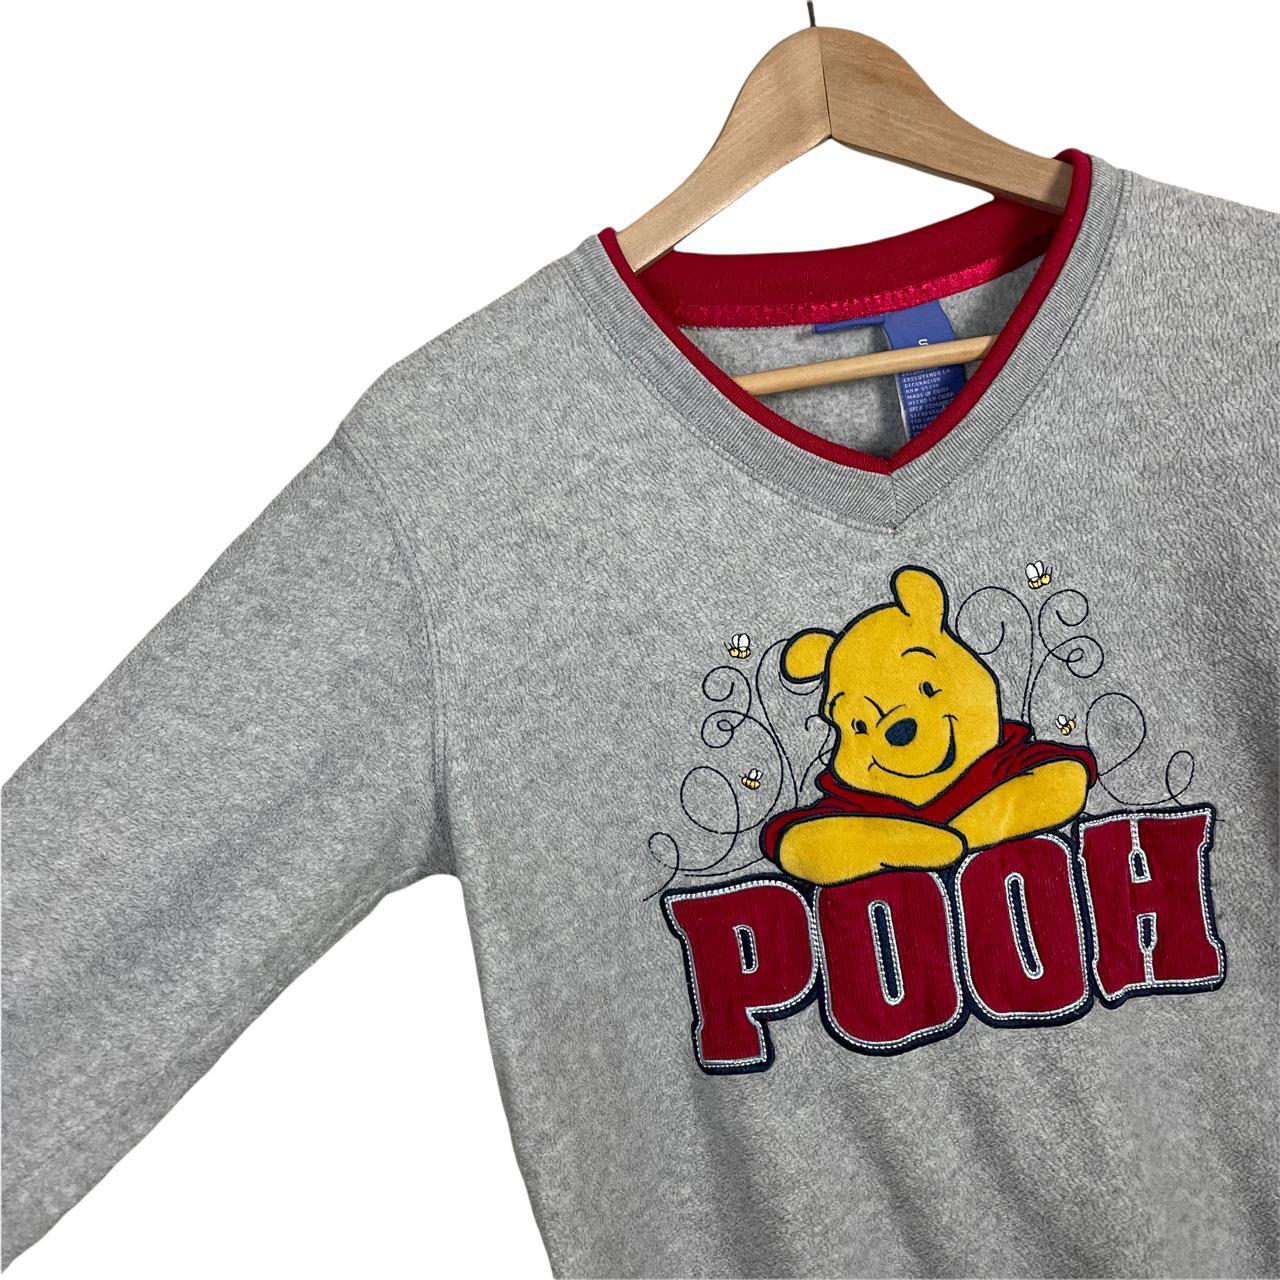 Product Image 2 - Disney Winnie the Pooh Corduroy